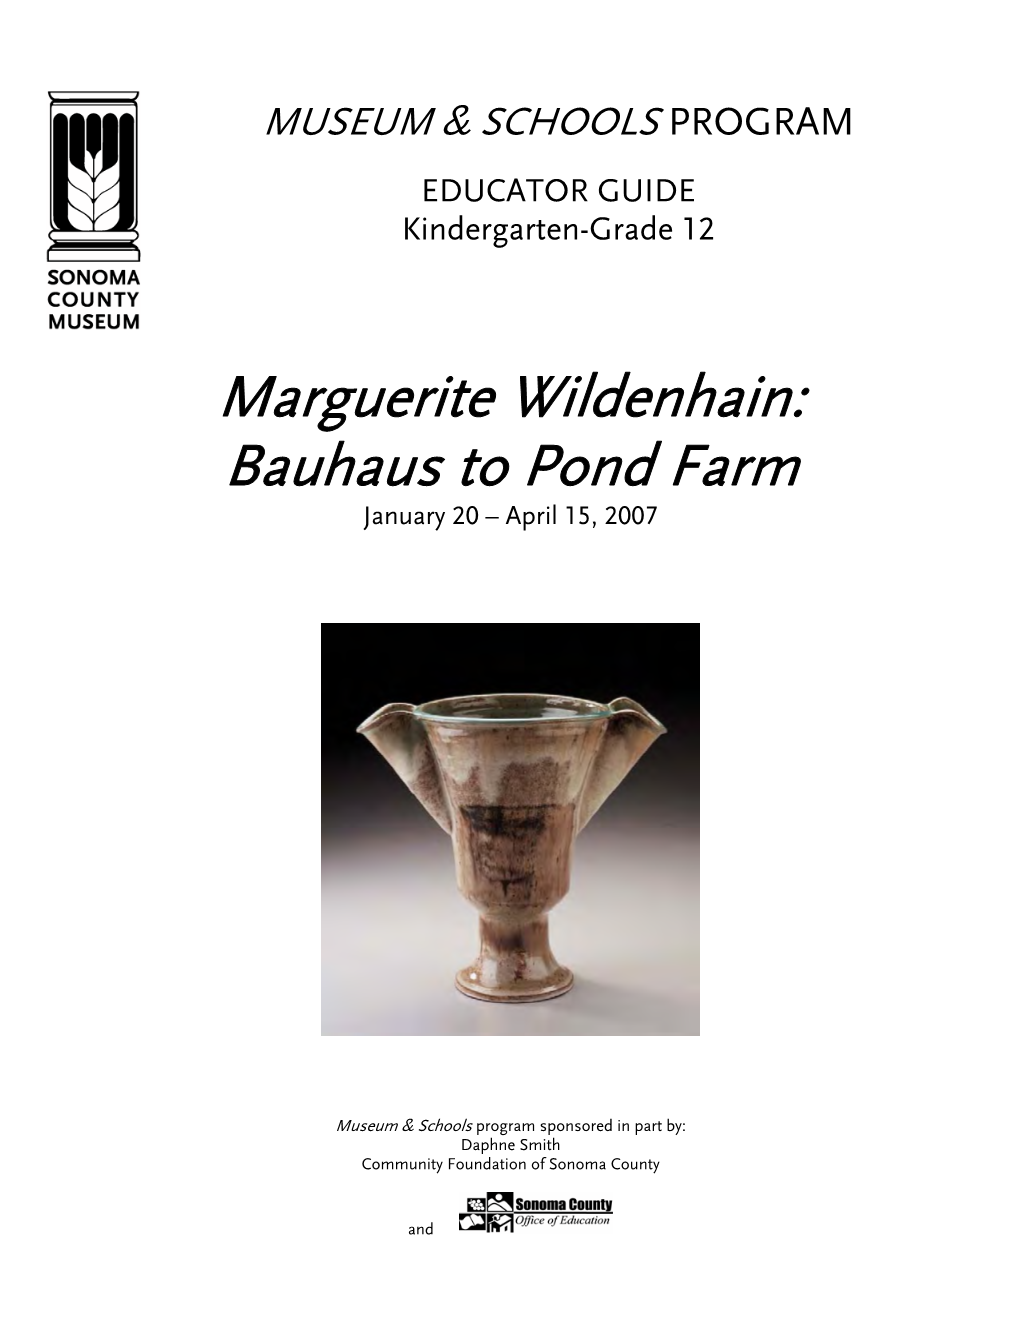 Marguerite Wildenhain: Bauhaus to Pond Farm January 20 – April 15, 2007